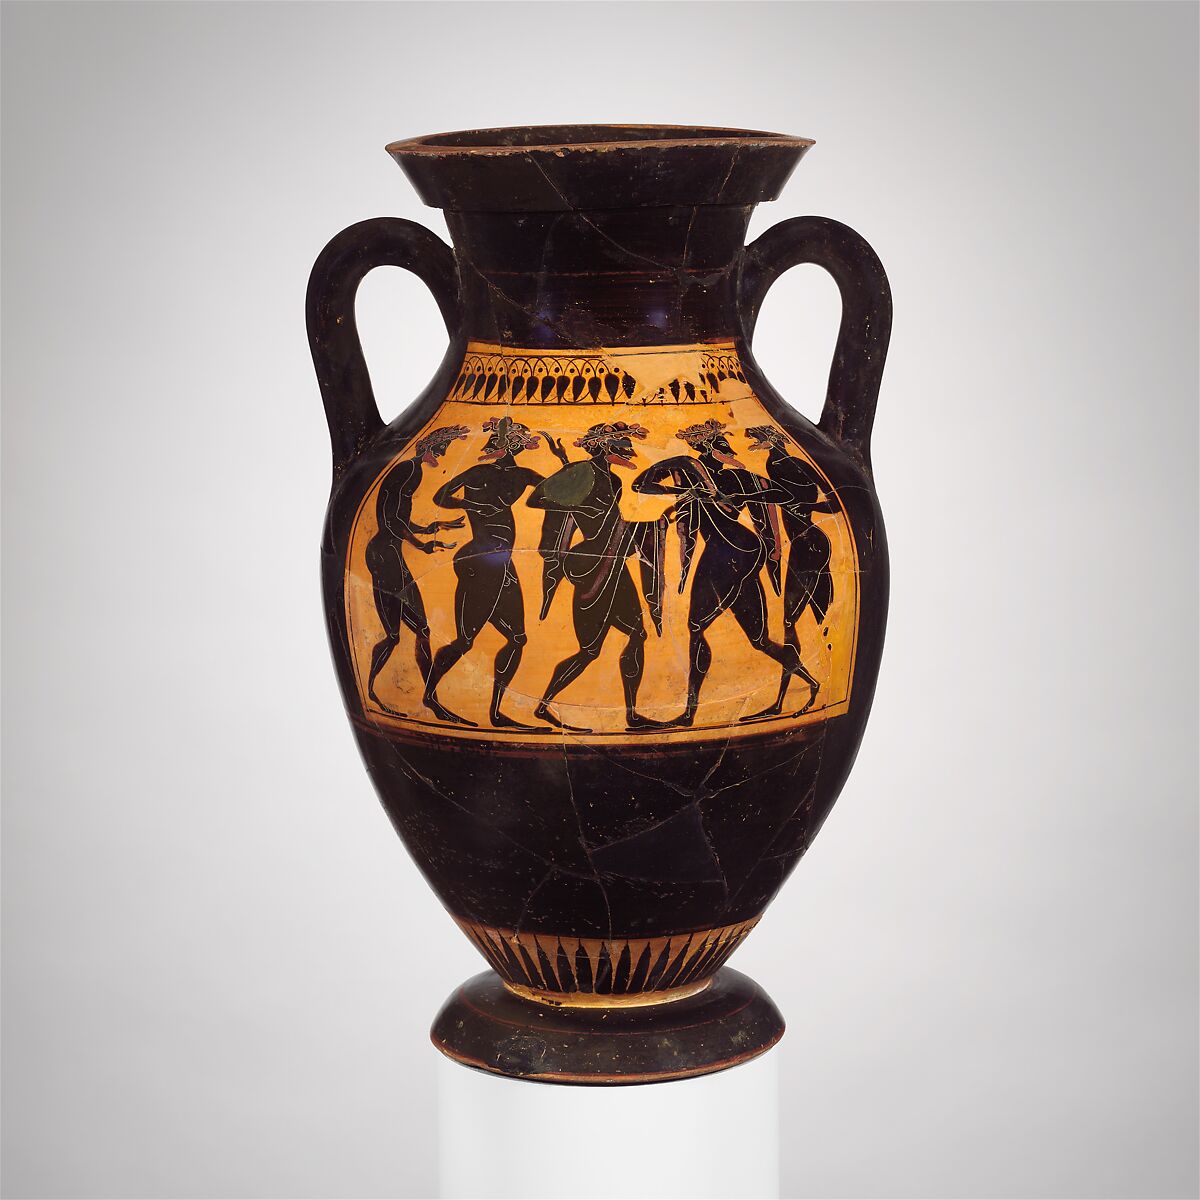 Terracotta amphora (jar), Attributed to the Acheloös Painter, Terracotta, Greek, Attic 